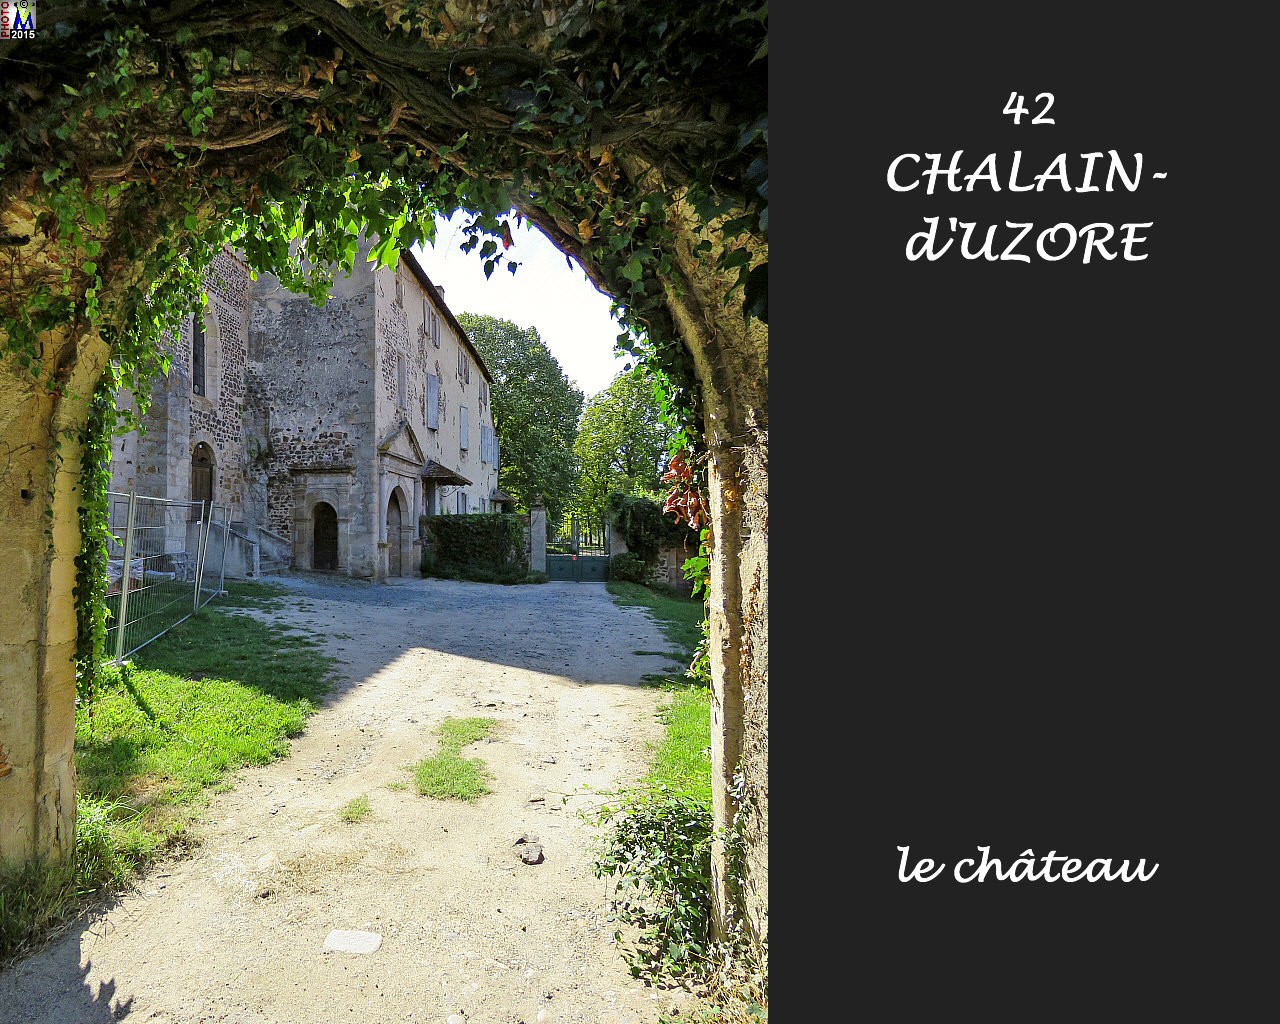 42CHALAIN-UZORE_chateau_102.jpg